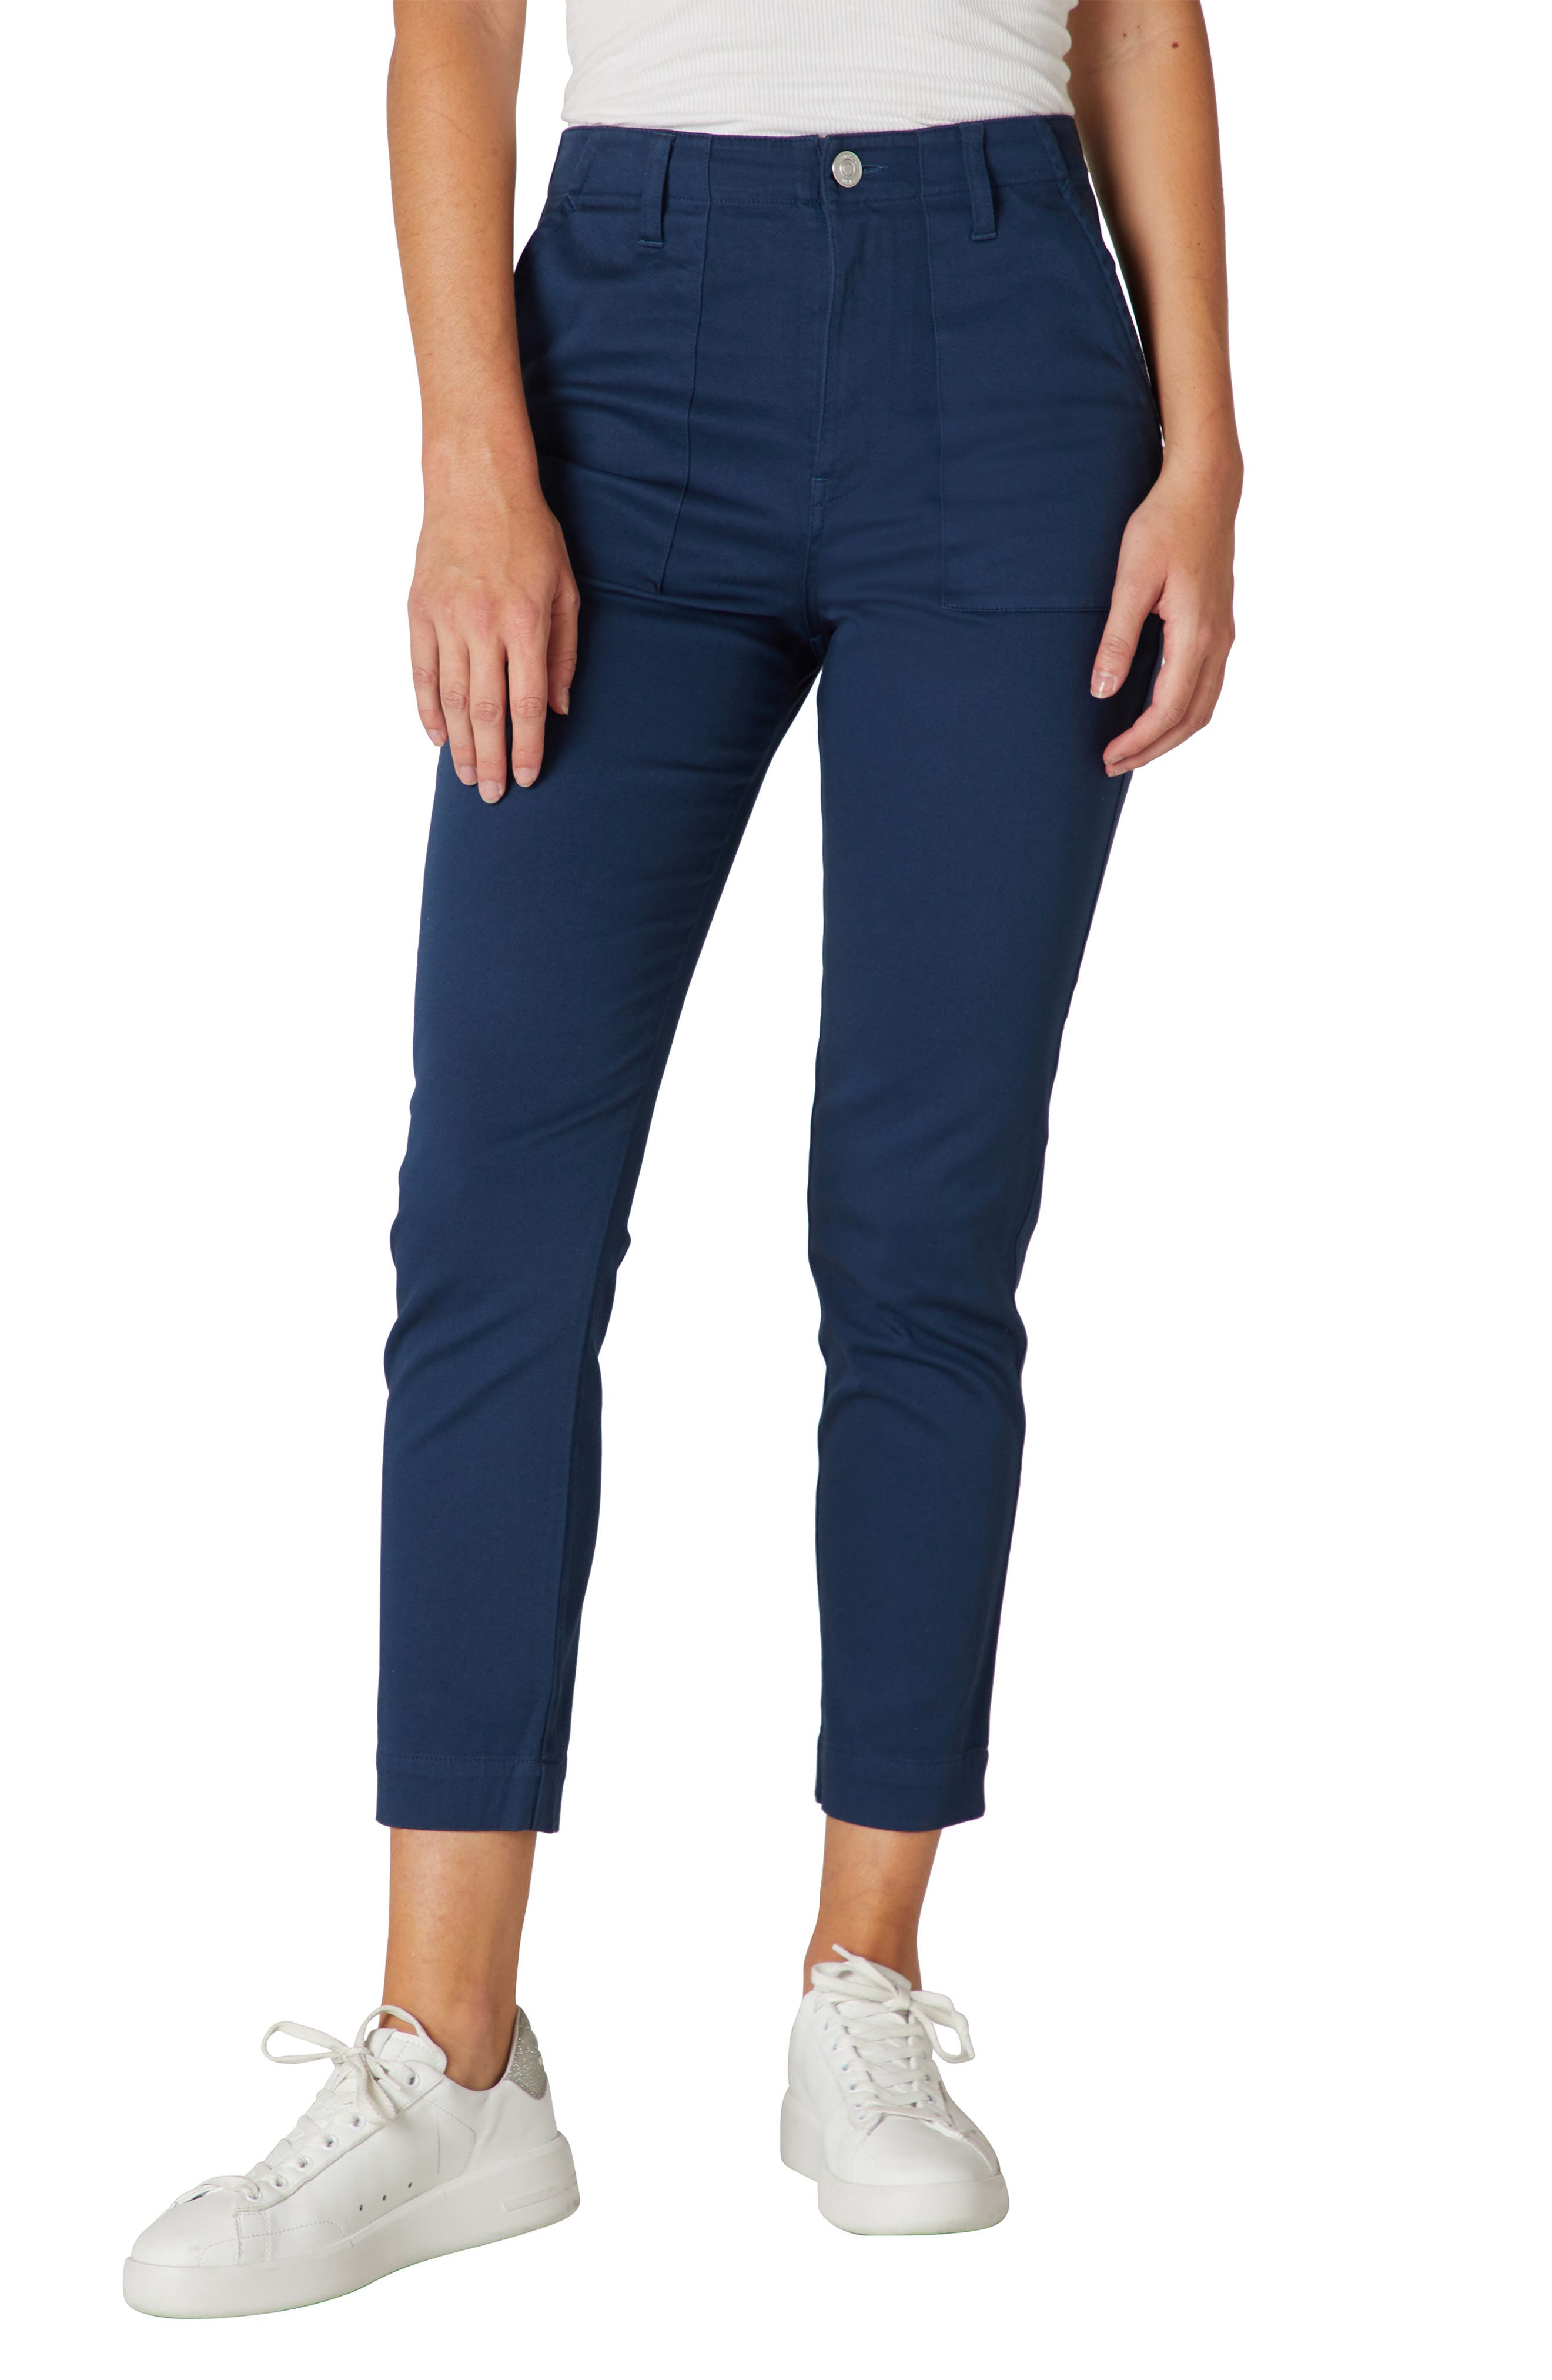 Women Jeans Pants Capri Crop Attention Skinny Dark Wash Denim Size 4 6 8 12 